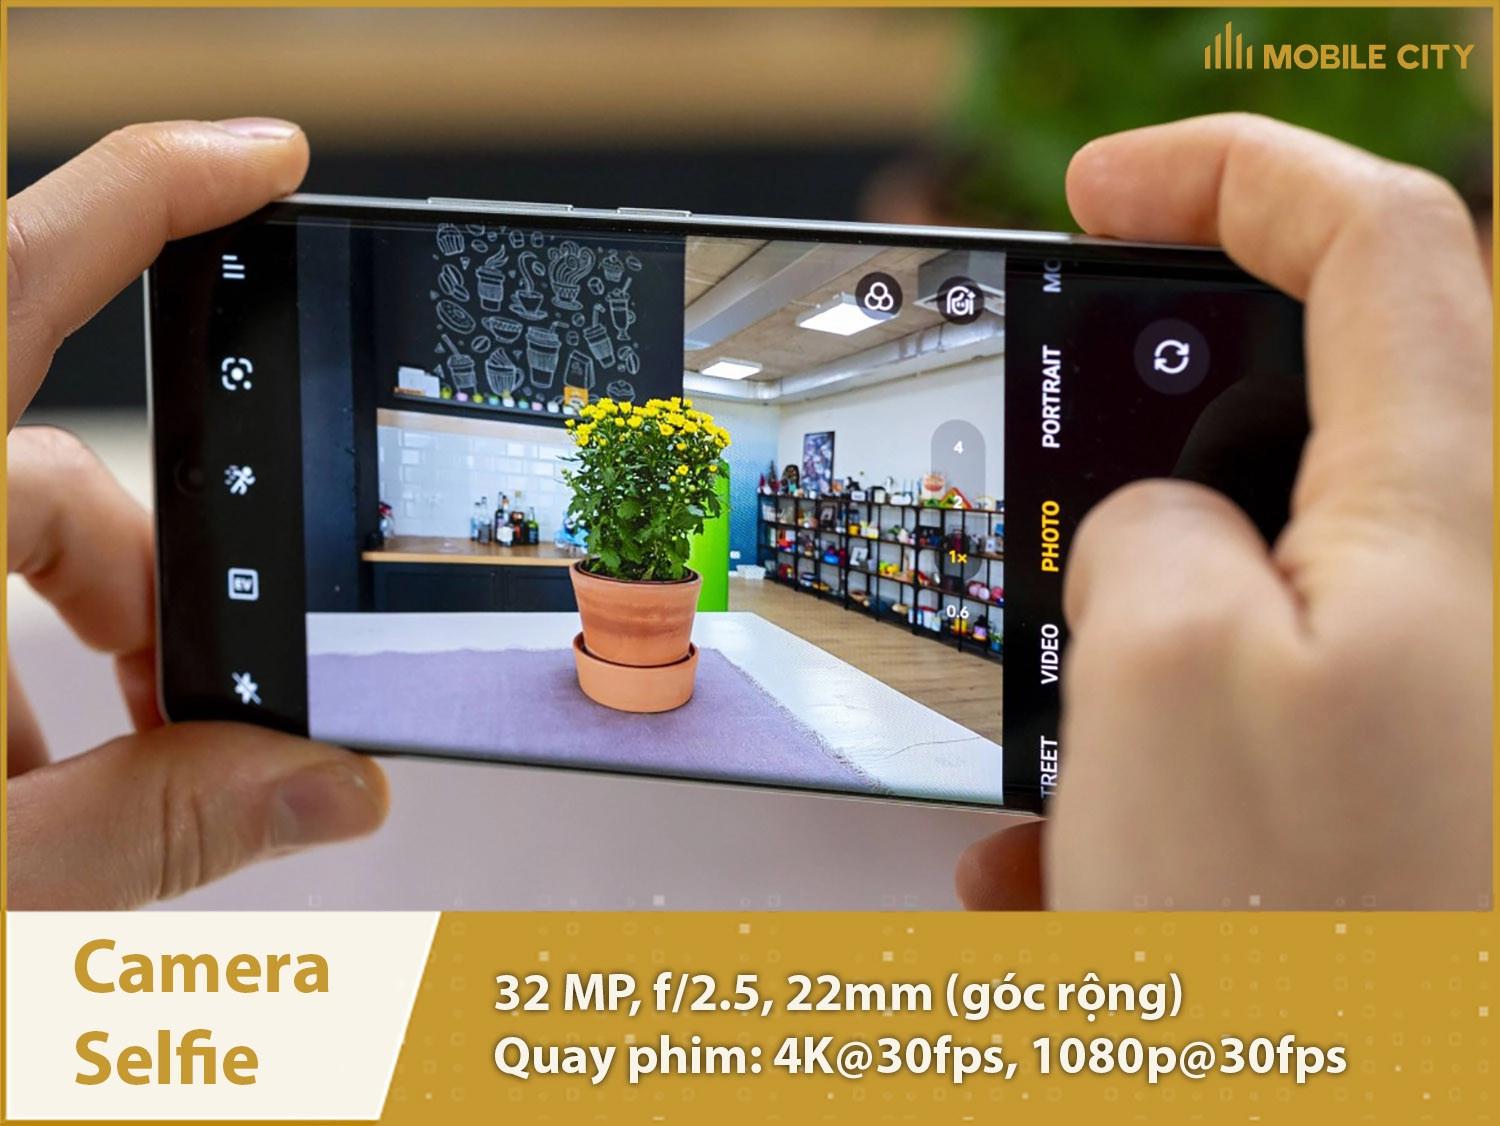 Camera selfie 32MP, quay phim 4K